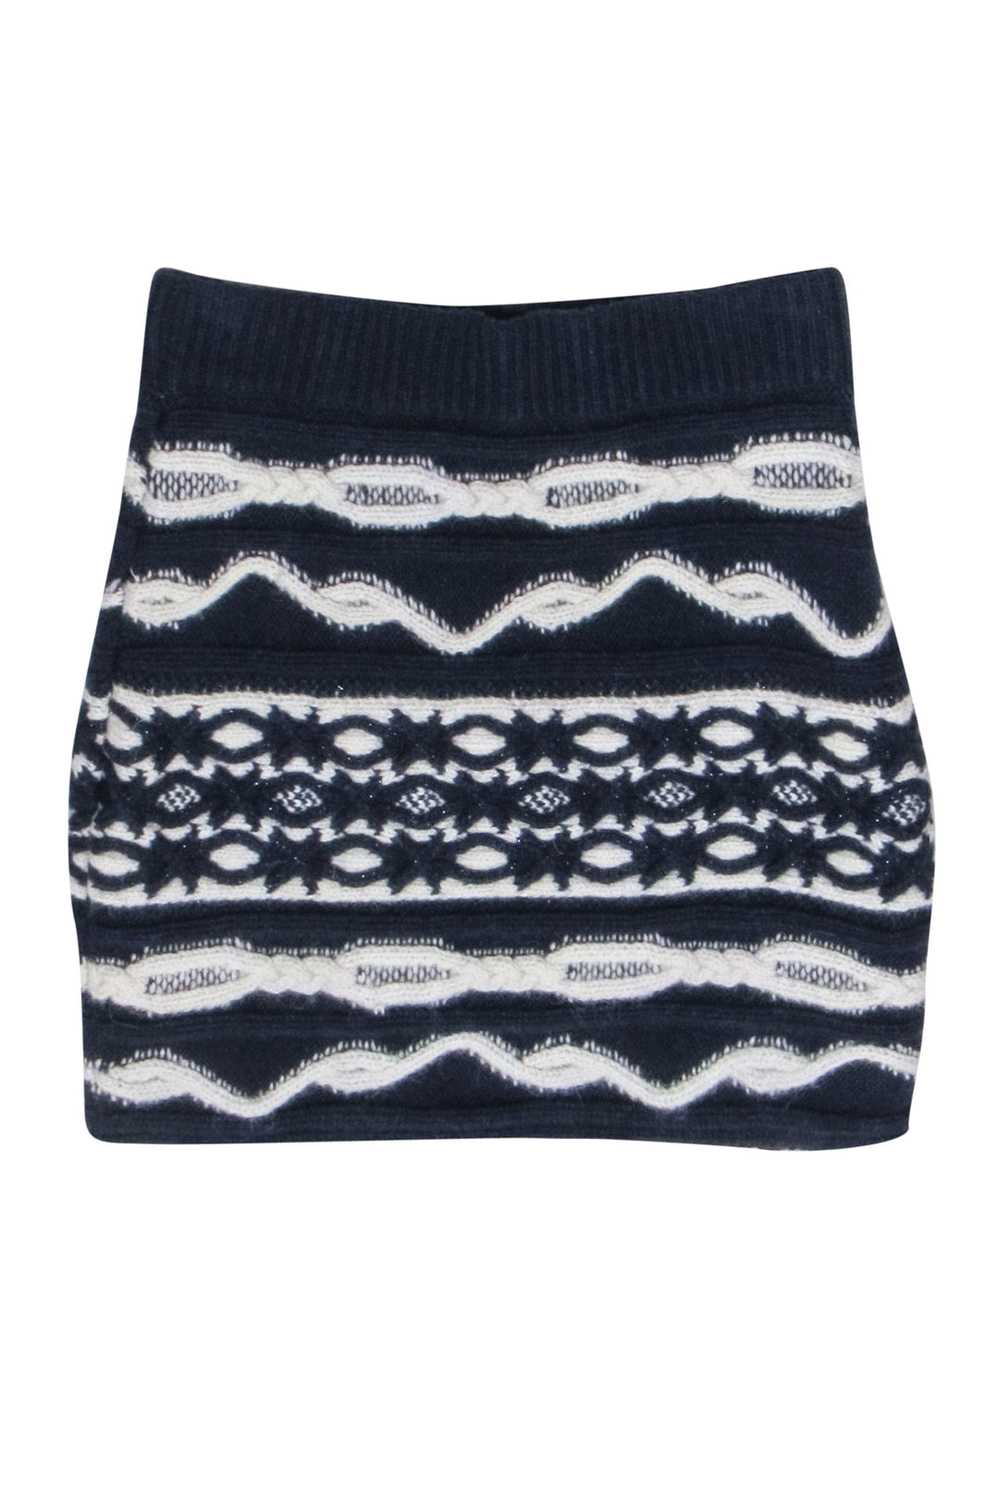 Chanel - Navy & Ivory Wool Blend Mini Skirt Sz 0 - image 2